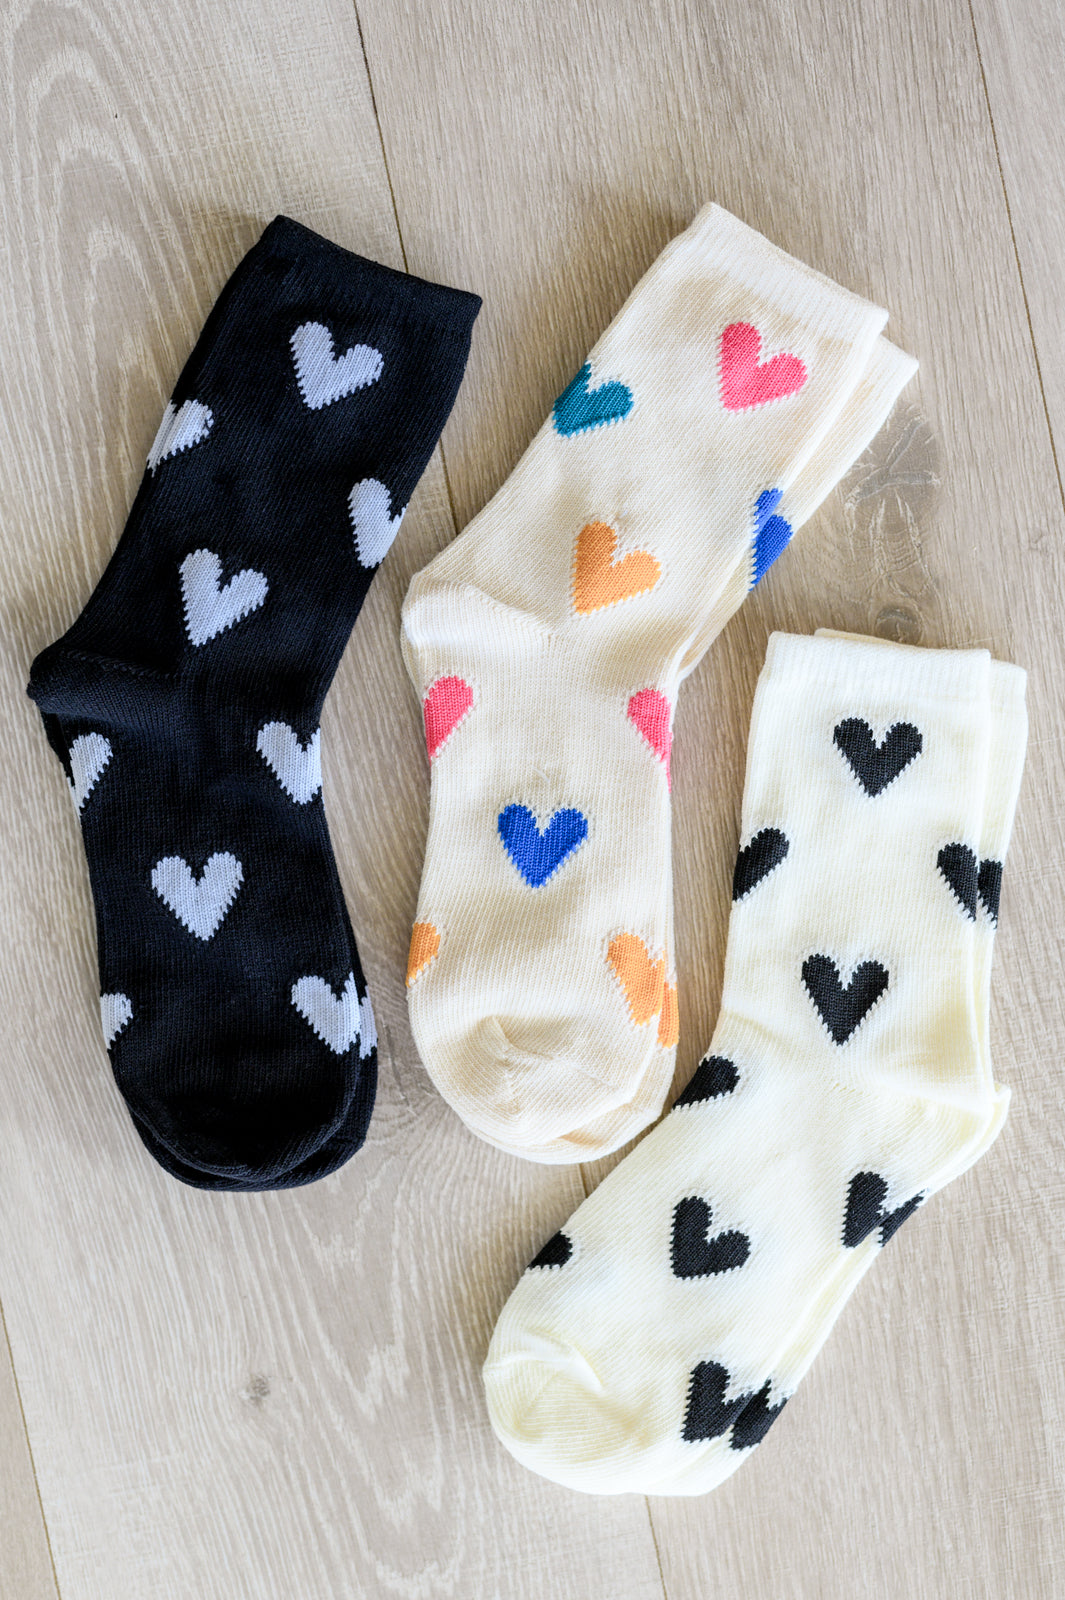 Woven Hearts Everyday Socks Set of 3 - Lola Cerina Boutique